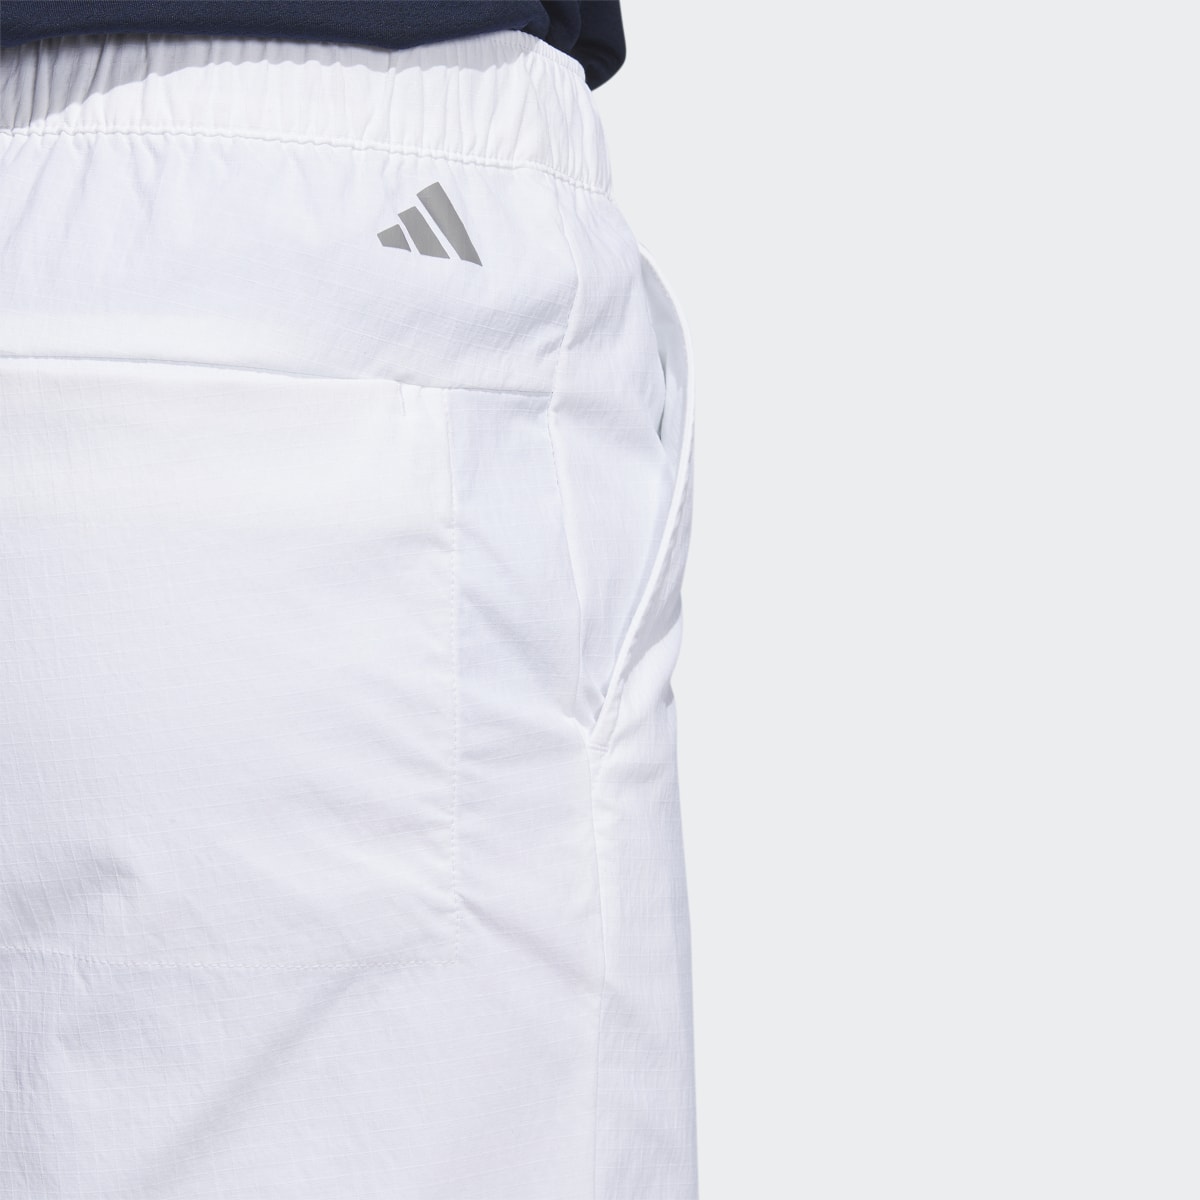 Adidas Ripstop Nine-Inch Golf Shorts. 5